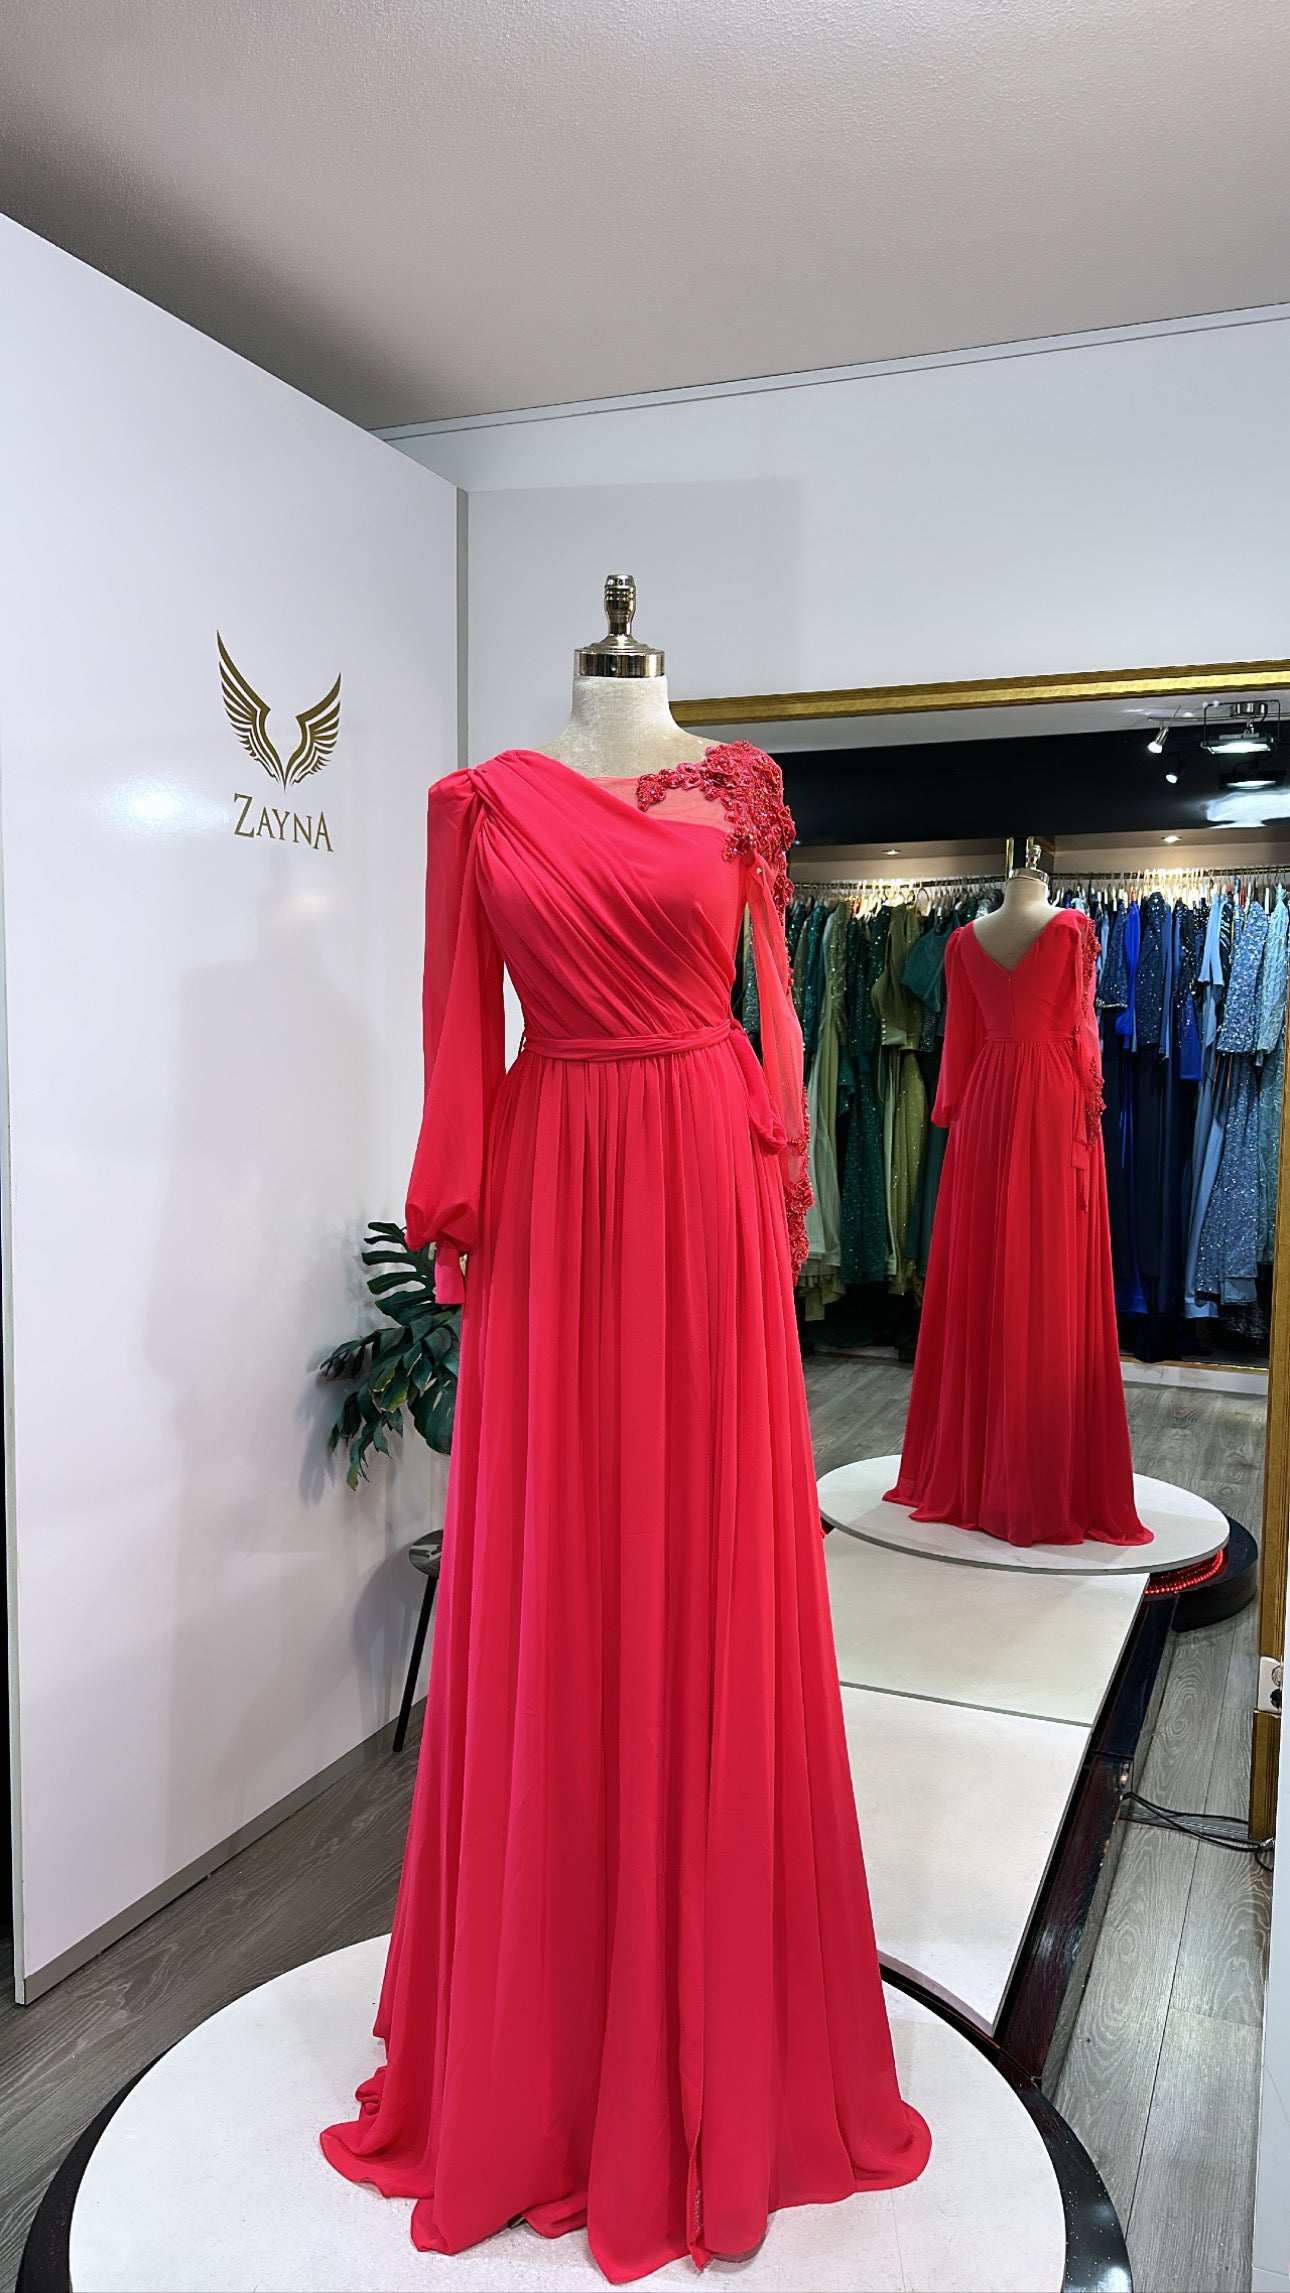 Elegant pink dress chiffon fabric, edited, split